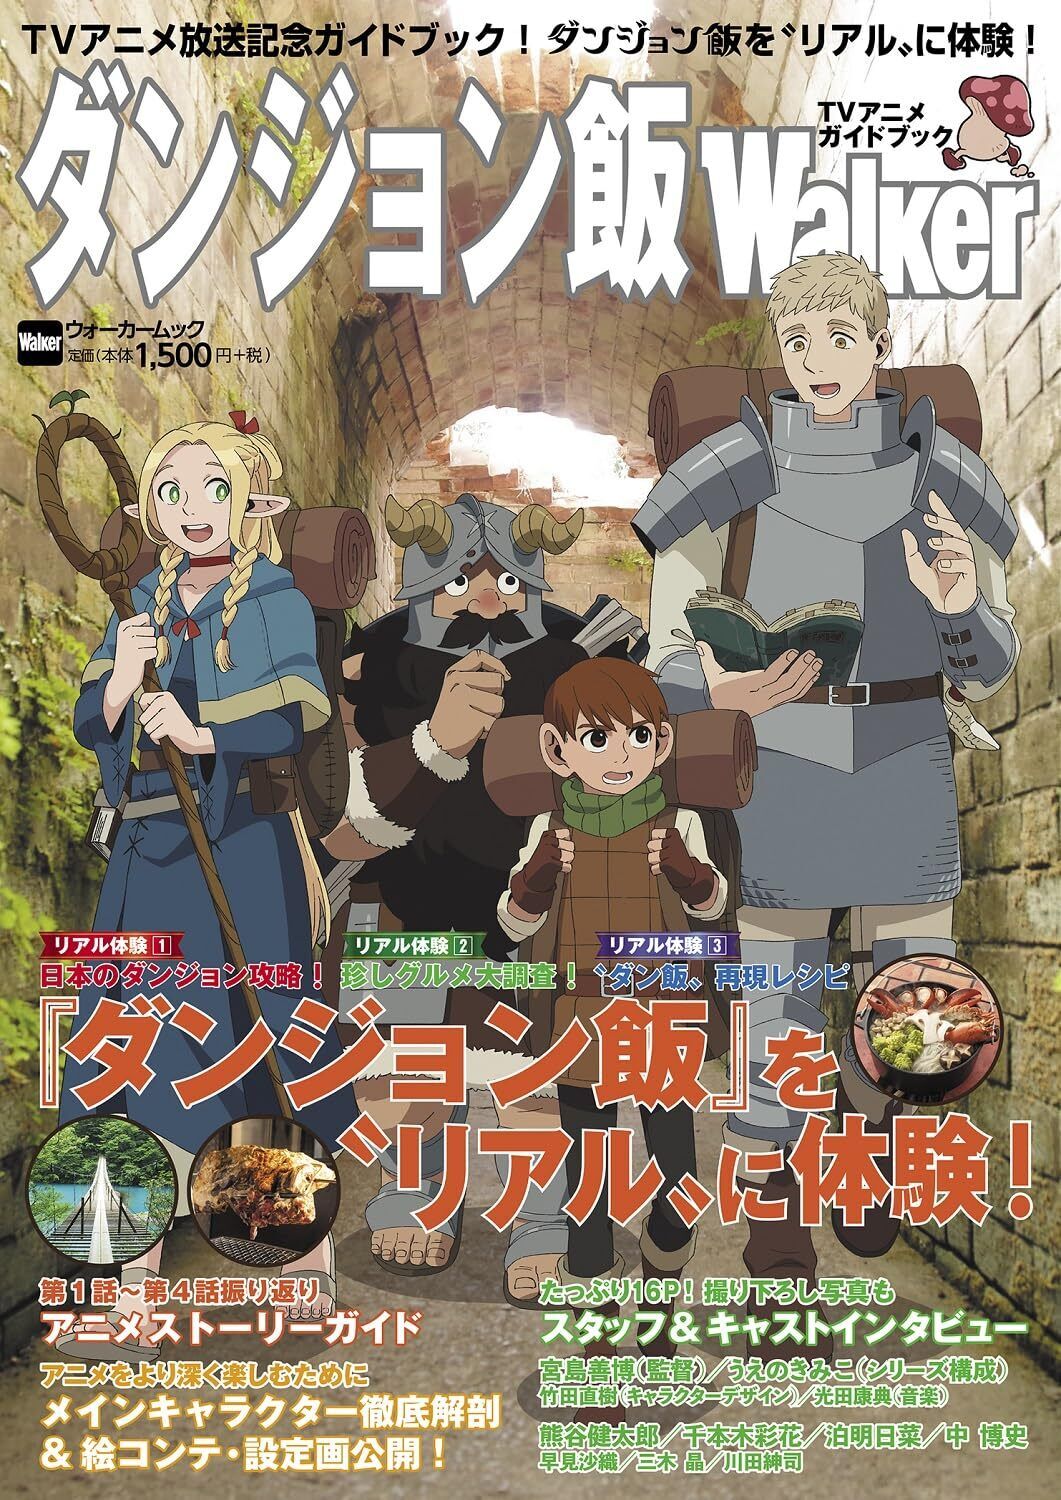 Dungeon Meshi Walker TV Anime Guide book illustration works New